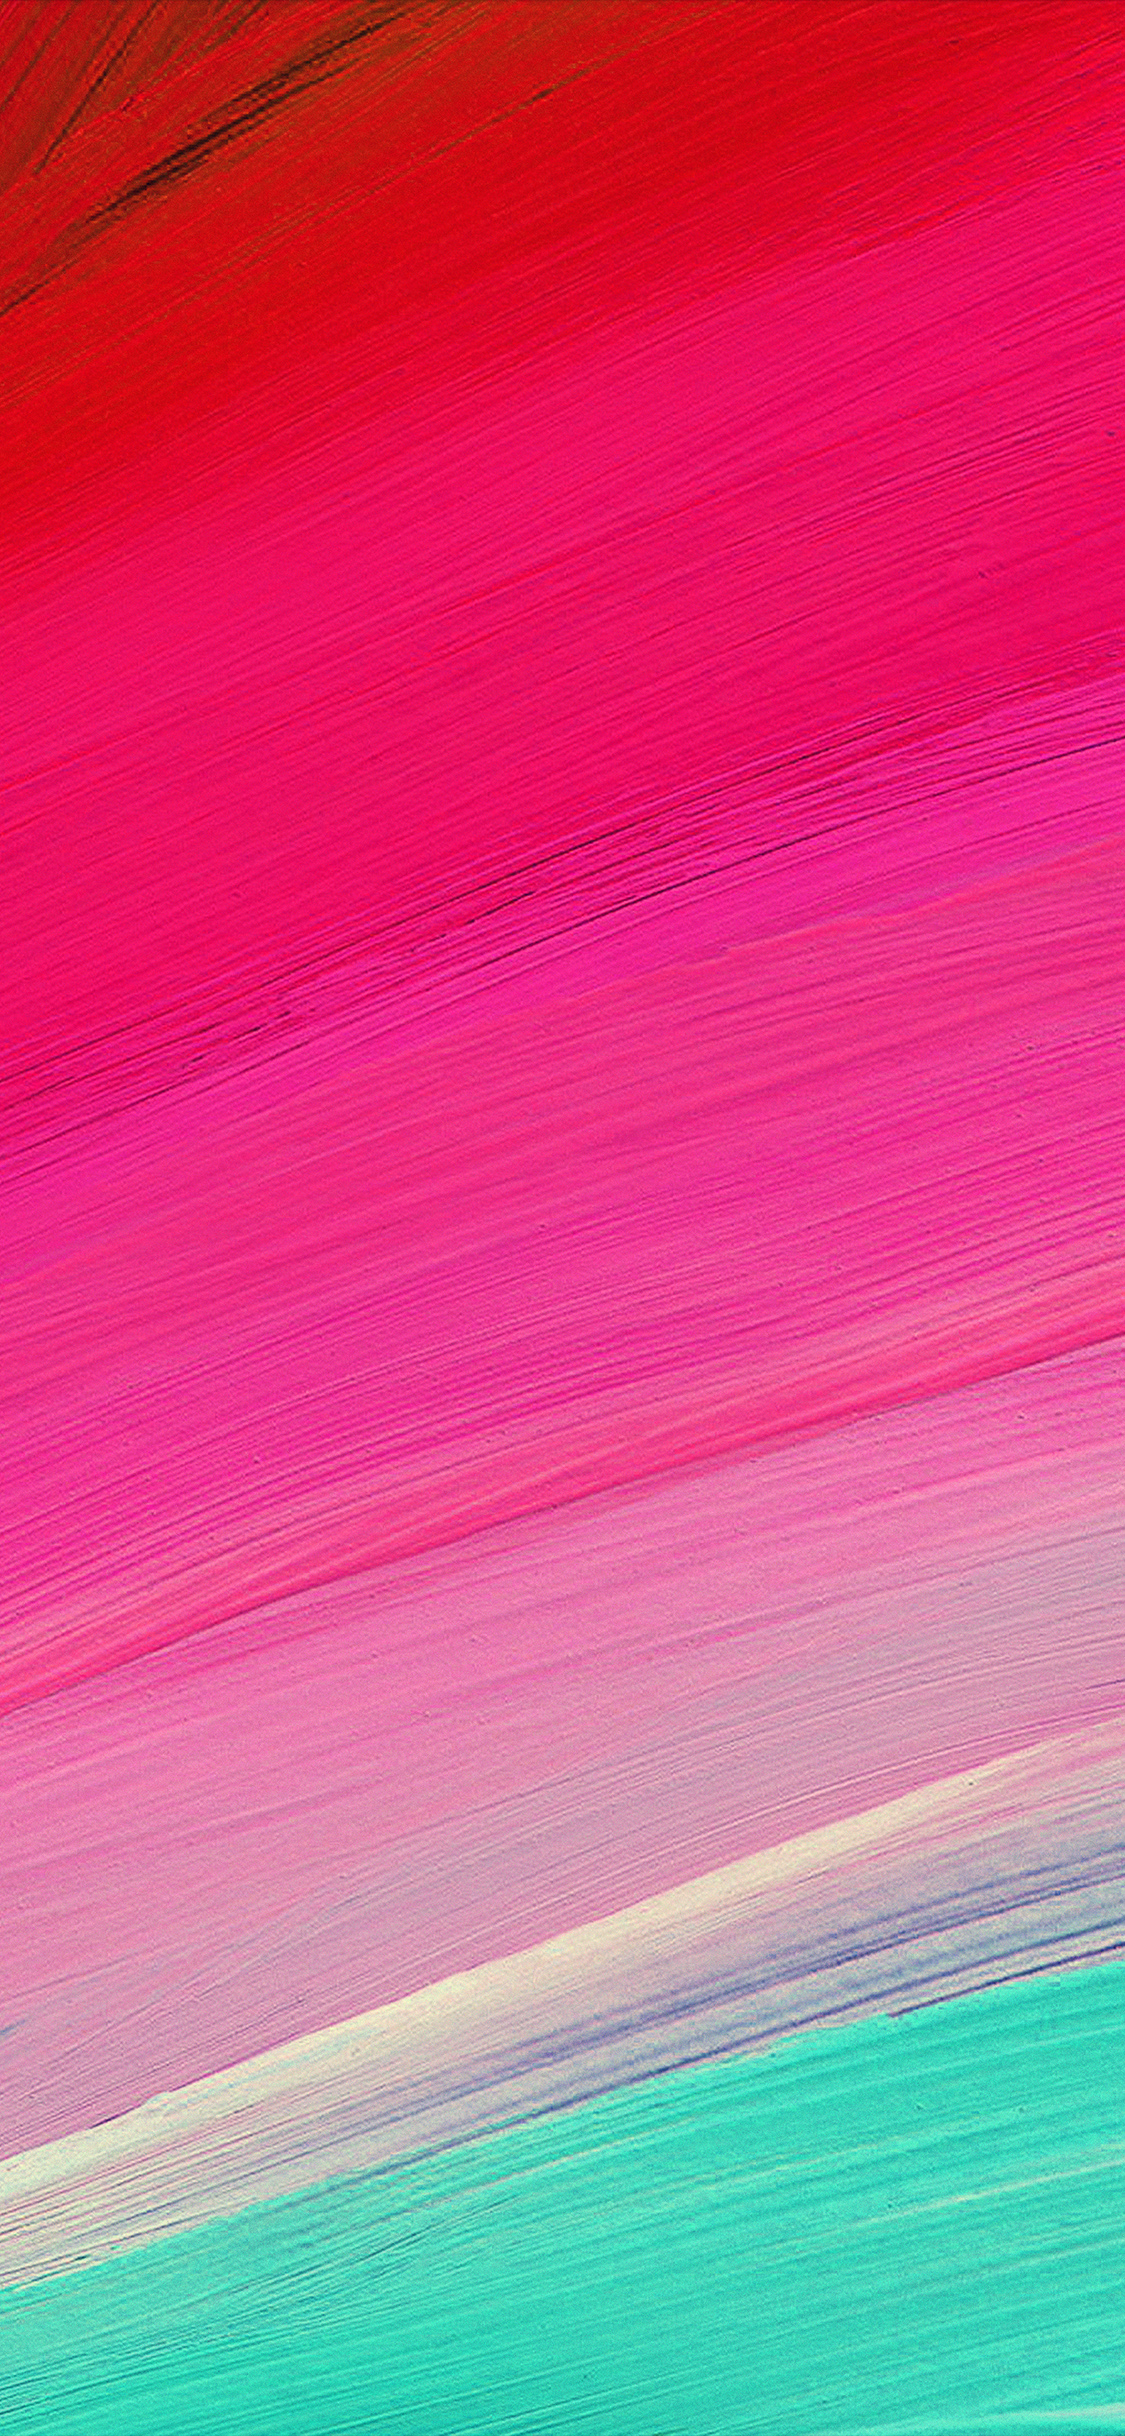 iPhone X wallpaper. rainbow swirl line abstract pattern magenta green